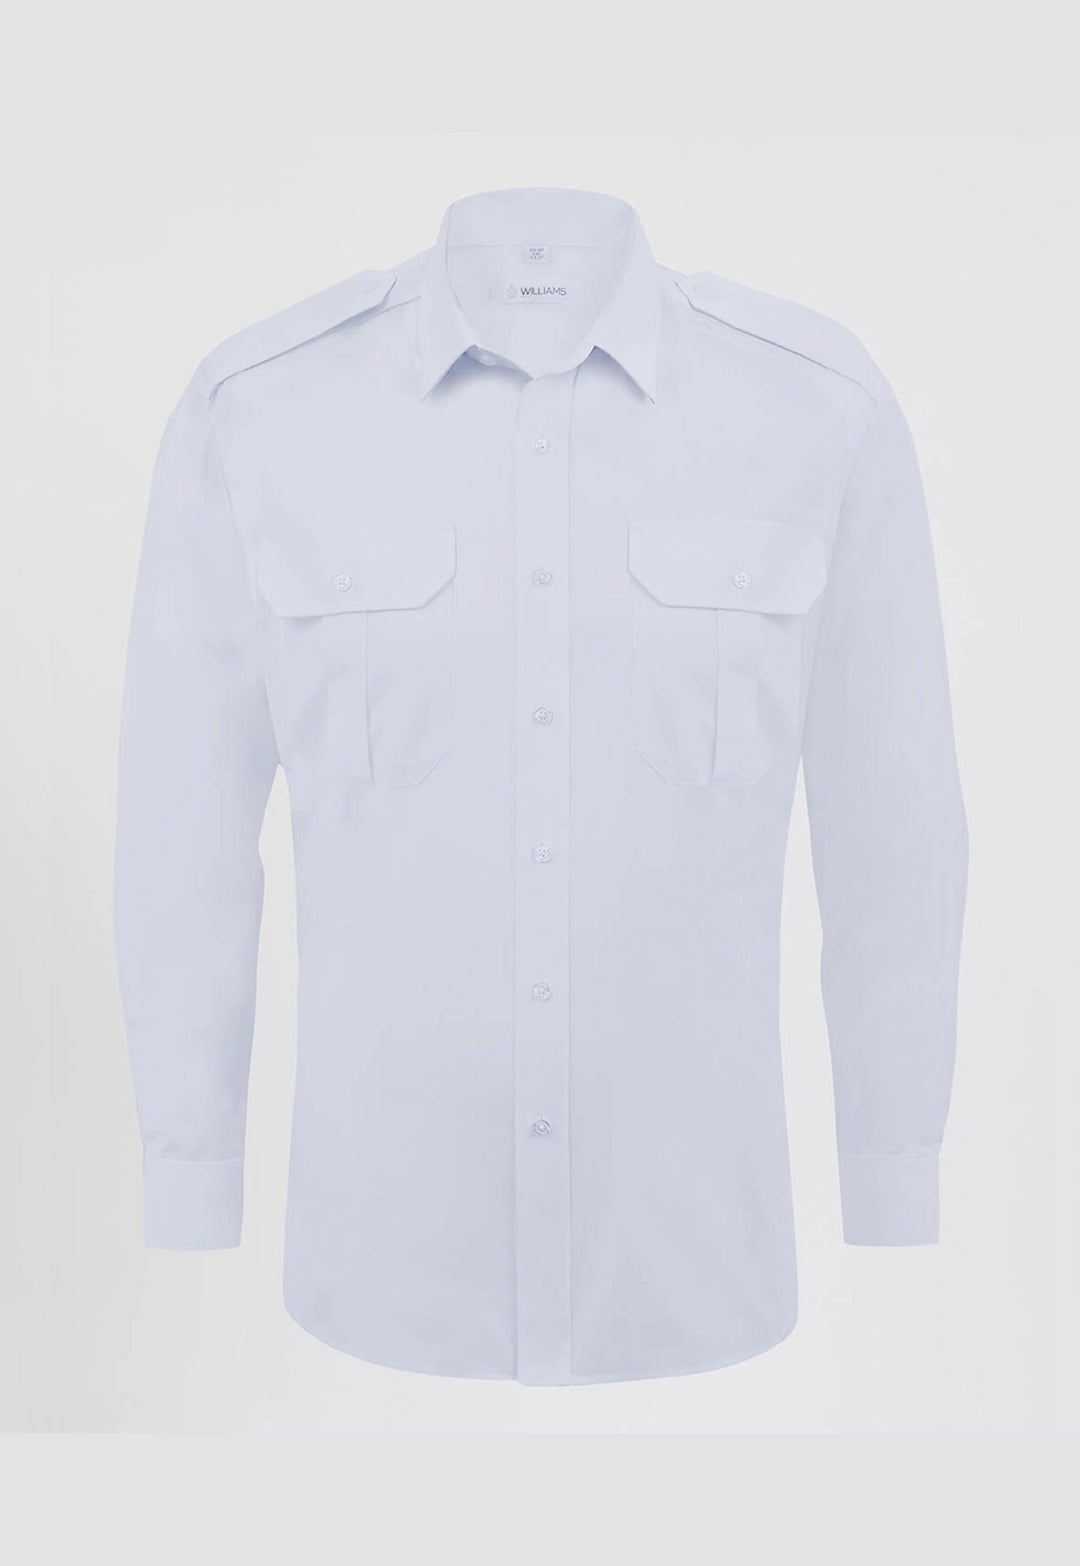 Men's Premium Pilot Shirt Long Sleeve - The Work Uniform Company